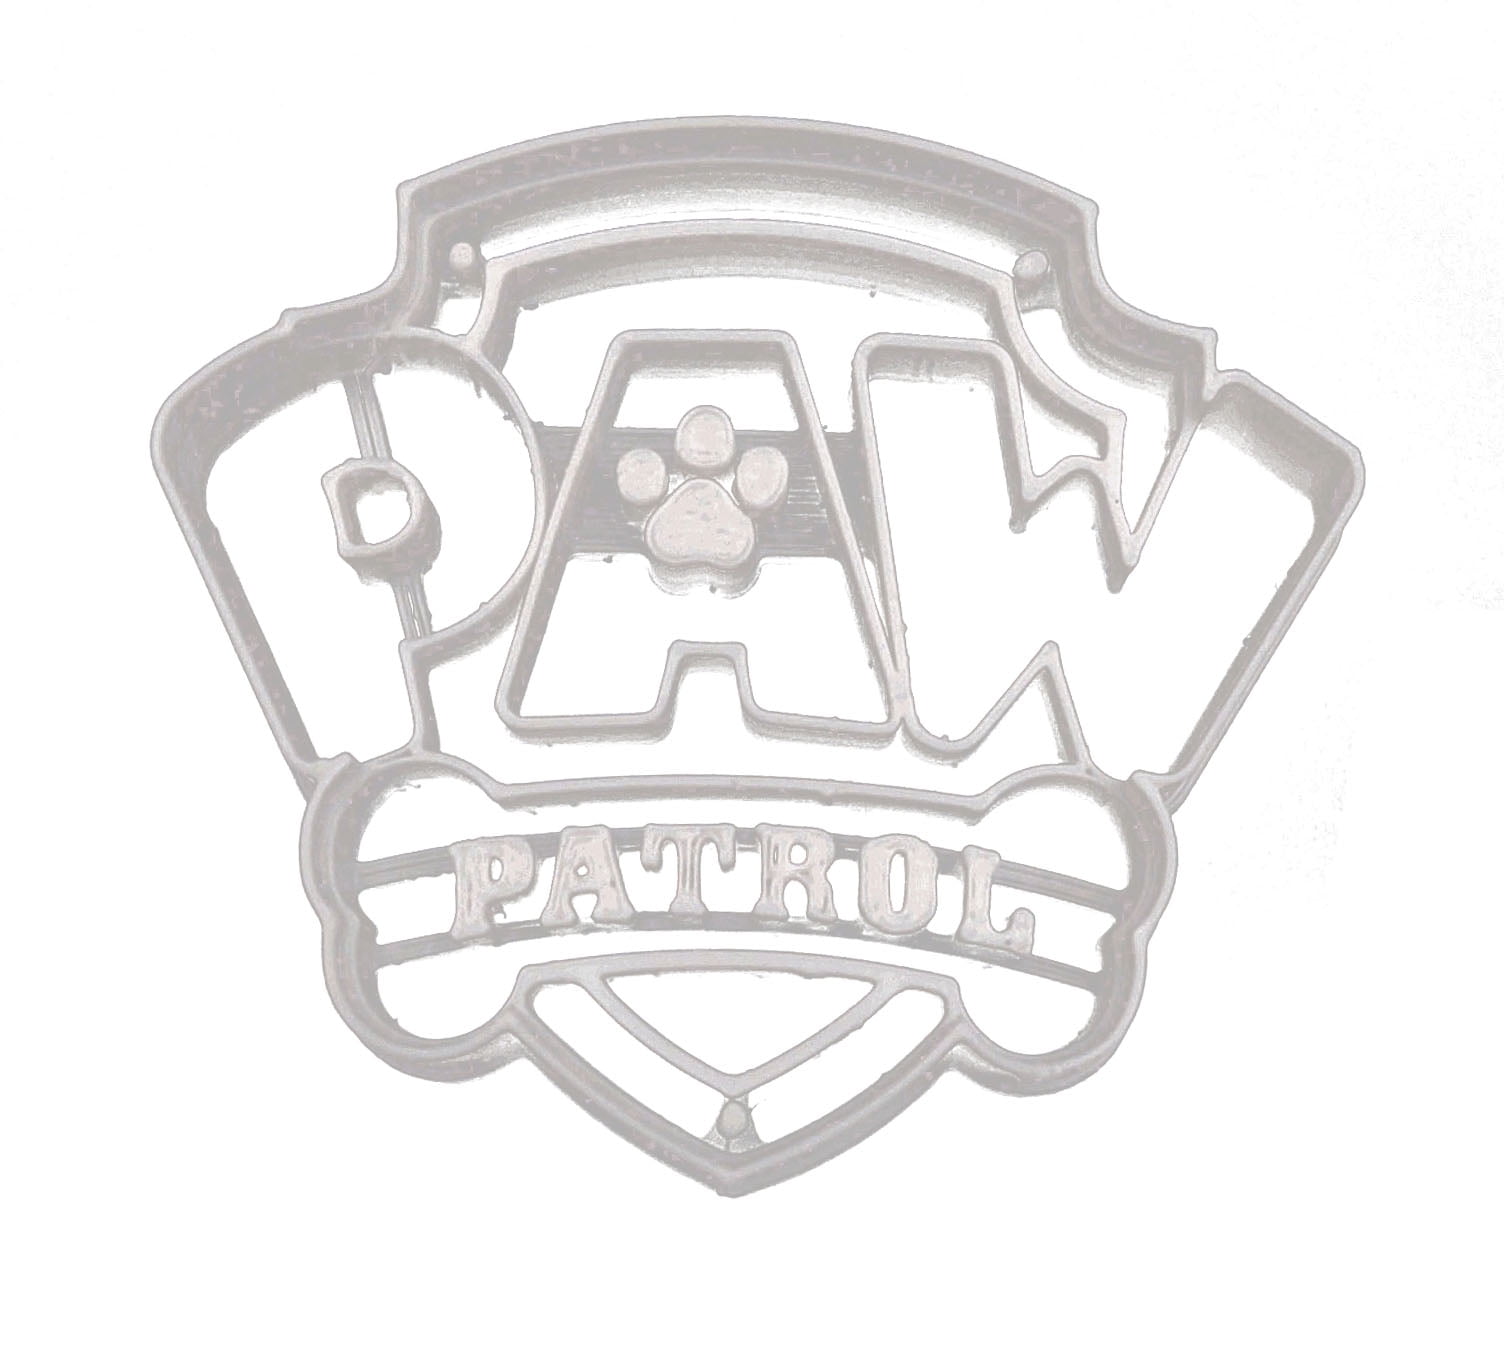 Paw Patrol Logo Cookie Fondant Cutter Set - Large Sizes! Extra